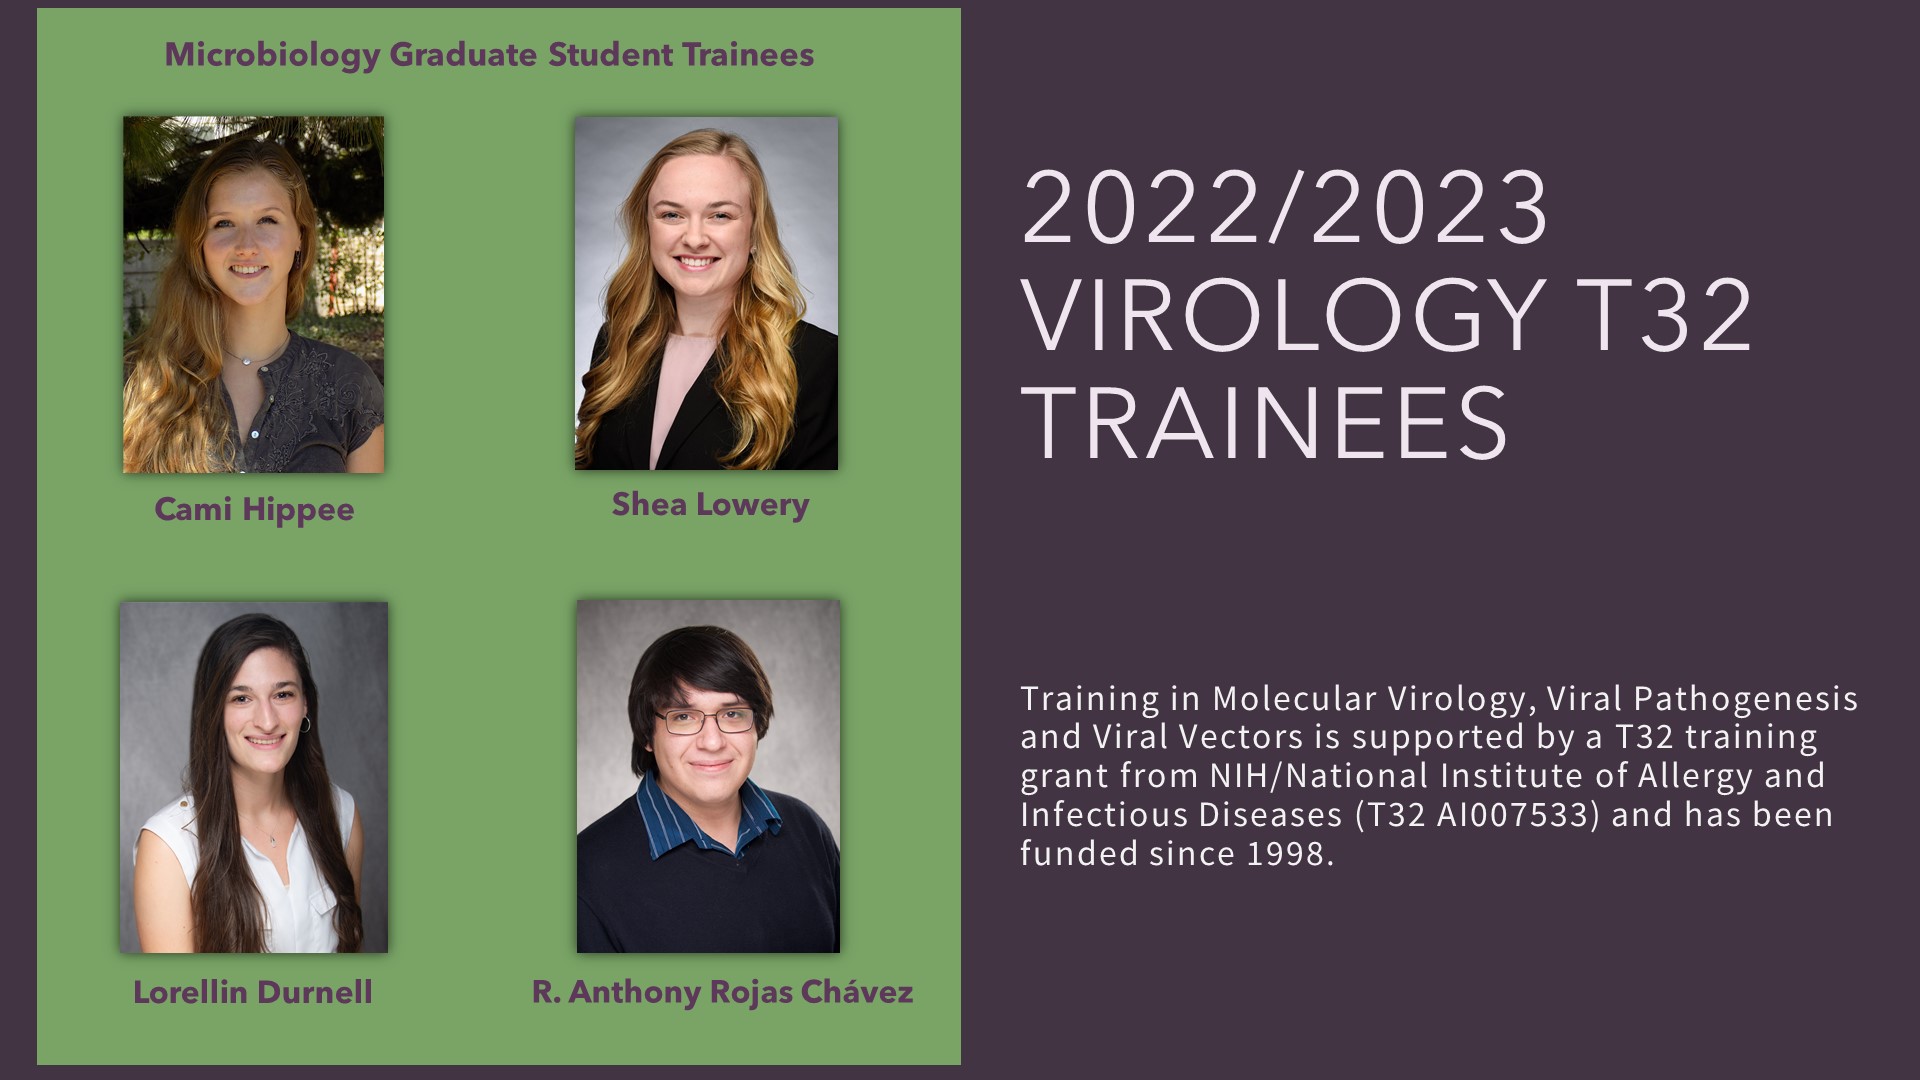 2022/2023 Virology T32 trainees